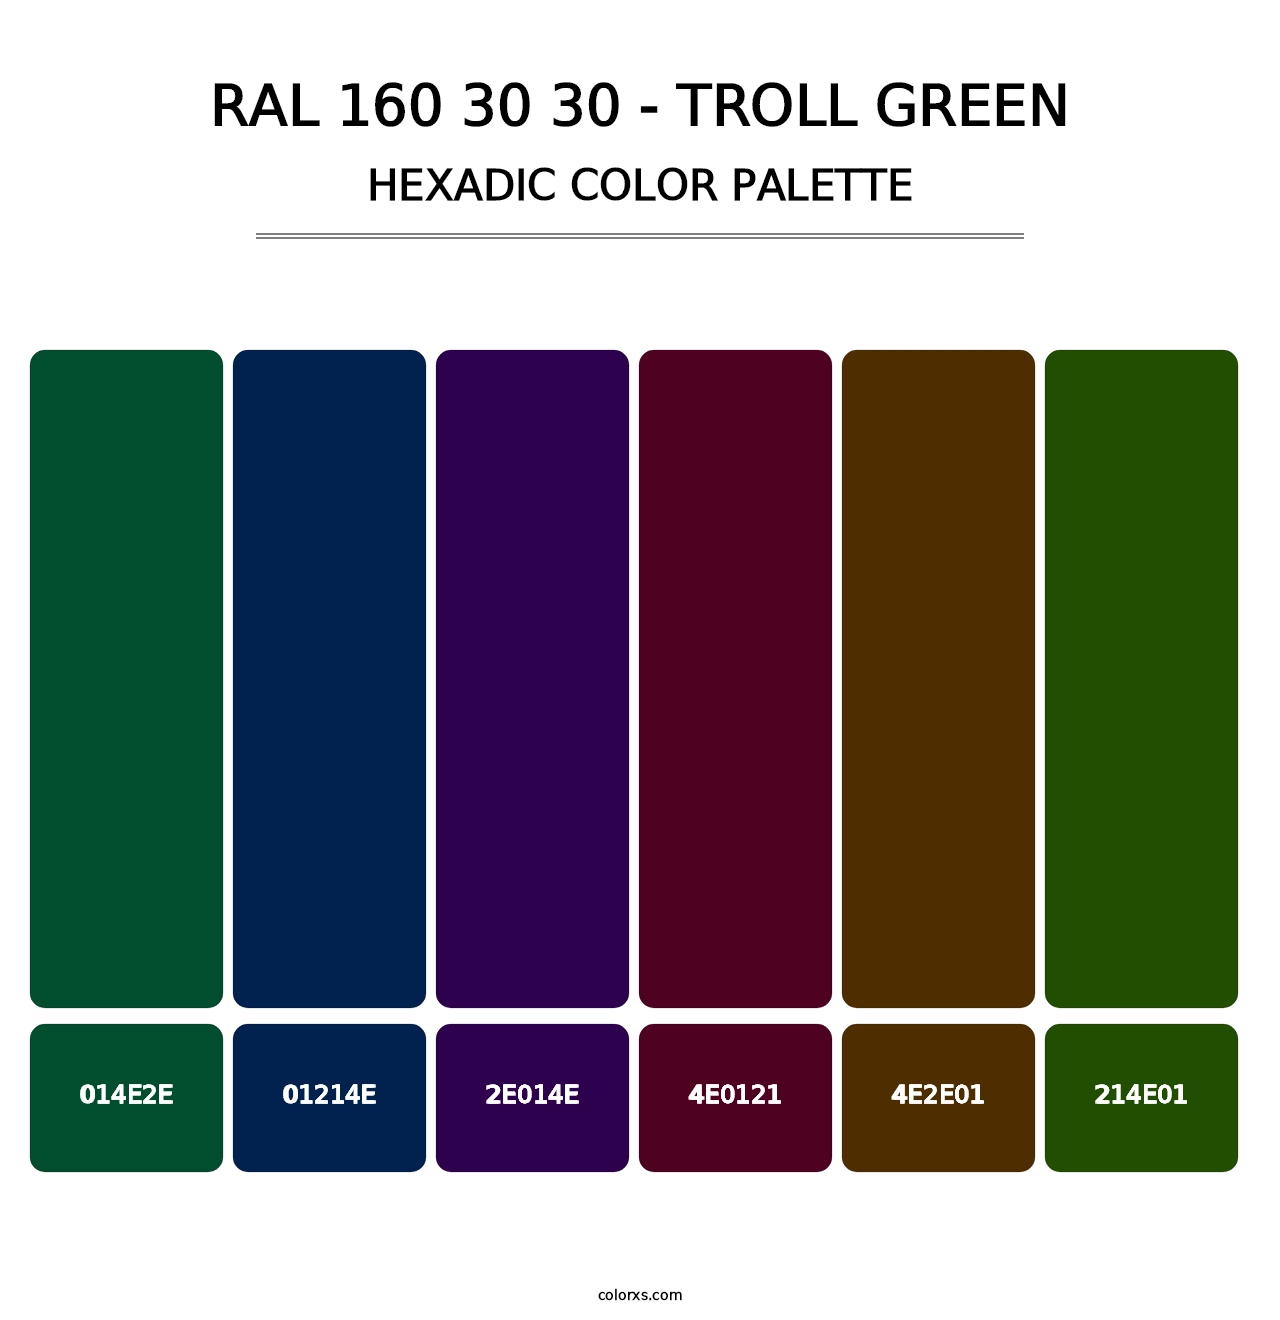 RAL 160 30 30 - Troll Green - Hexadic Color Palette